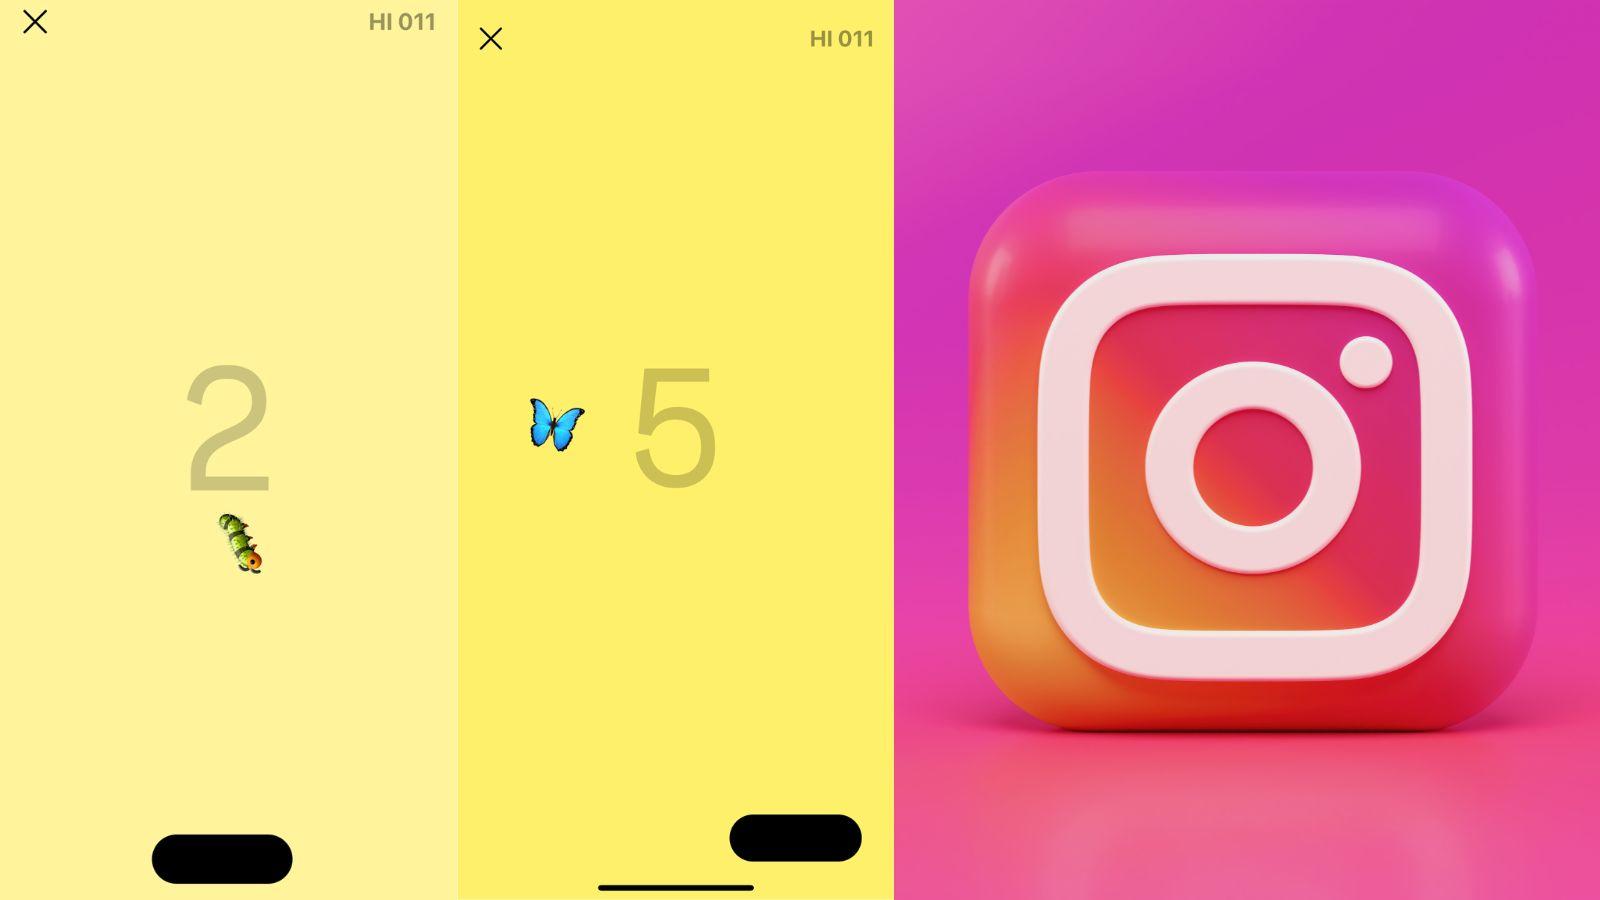 Instagram has a secret emoji game